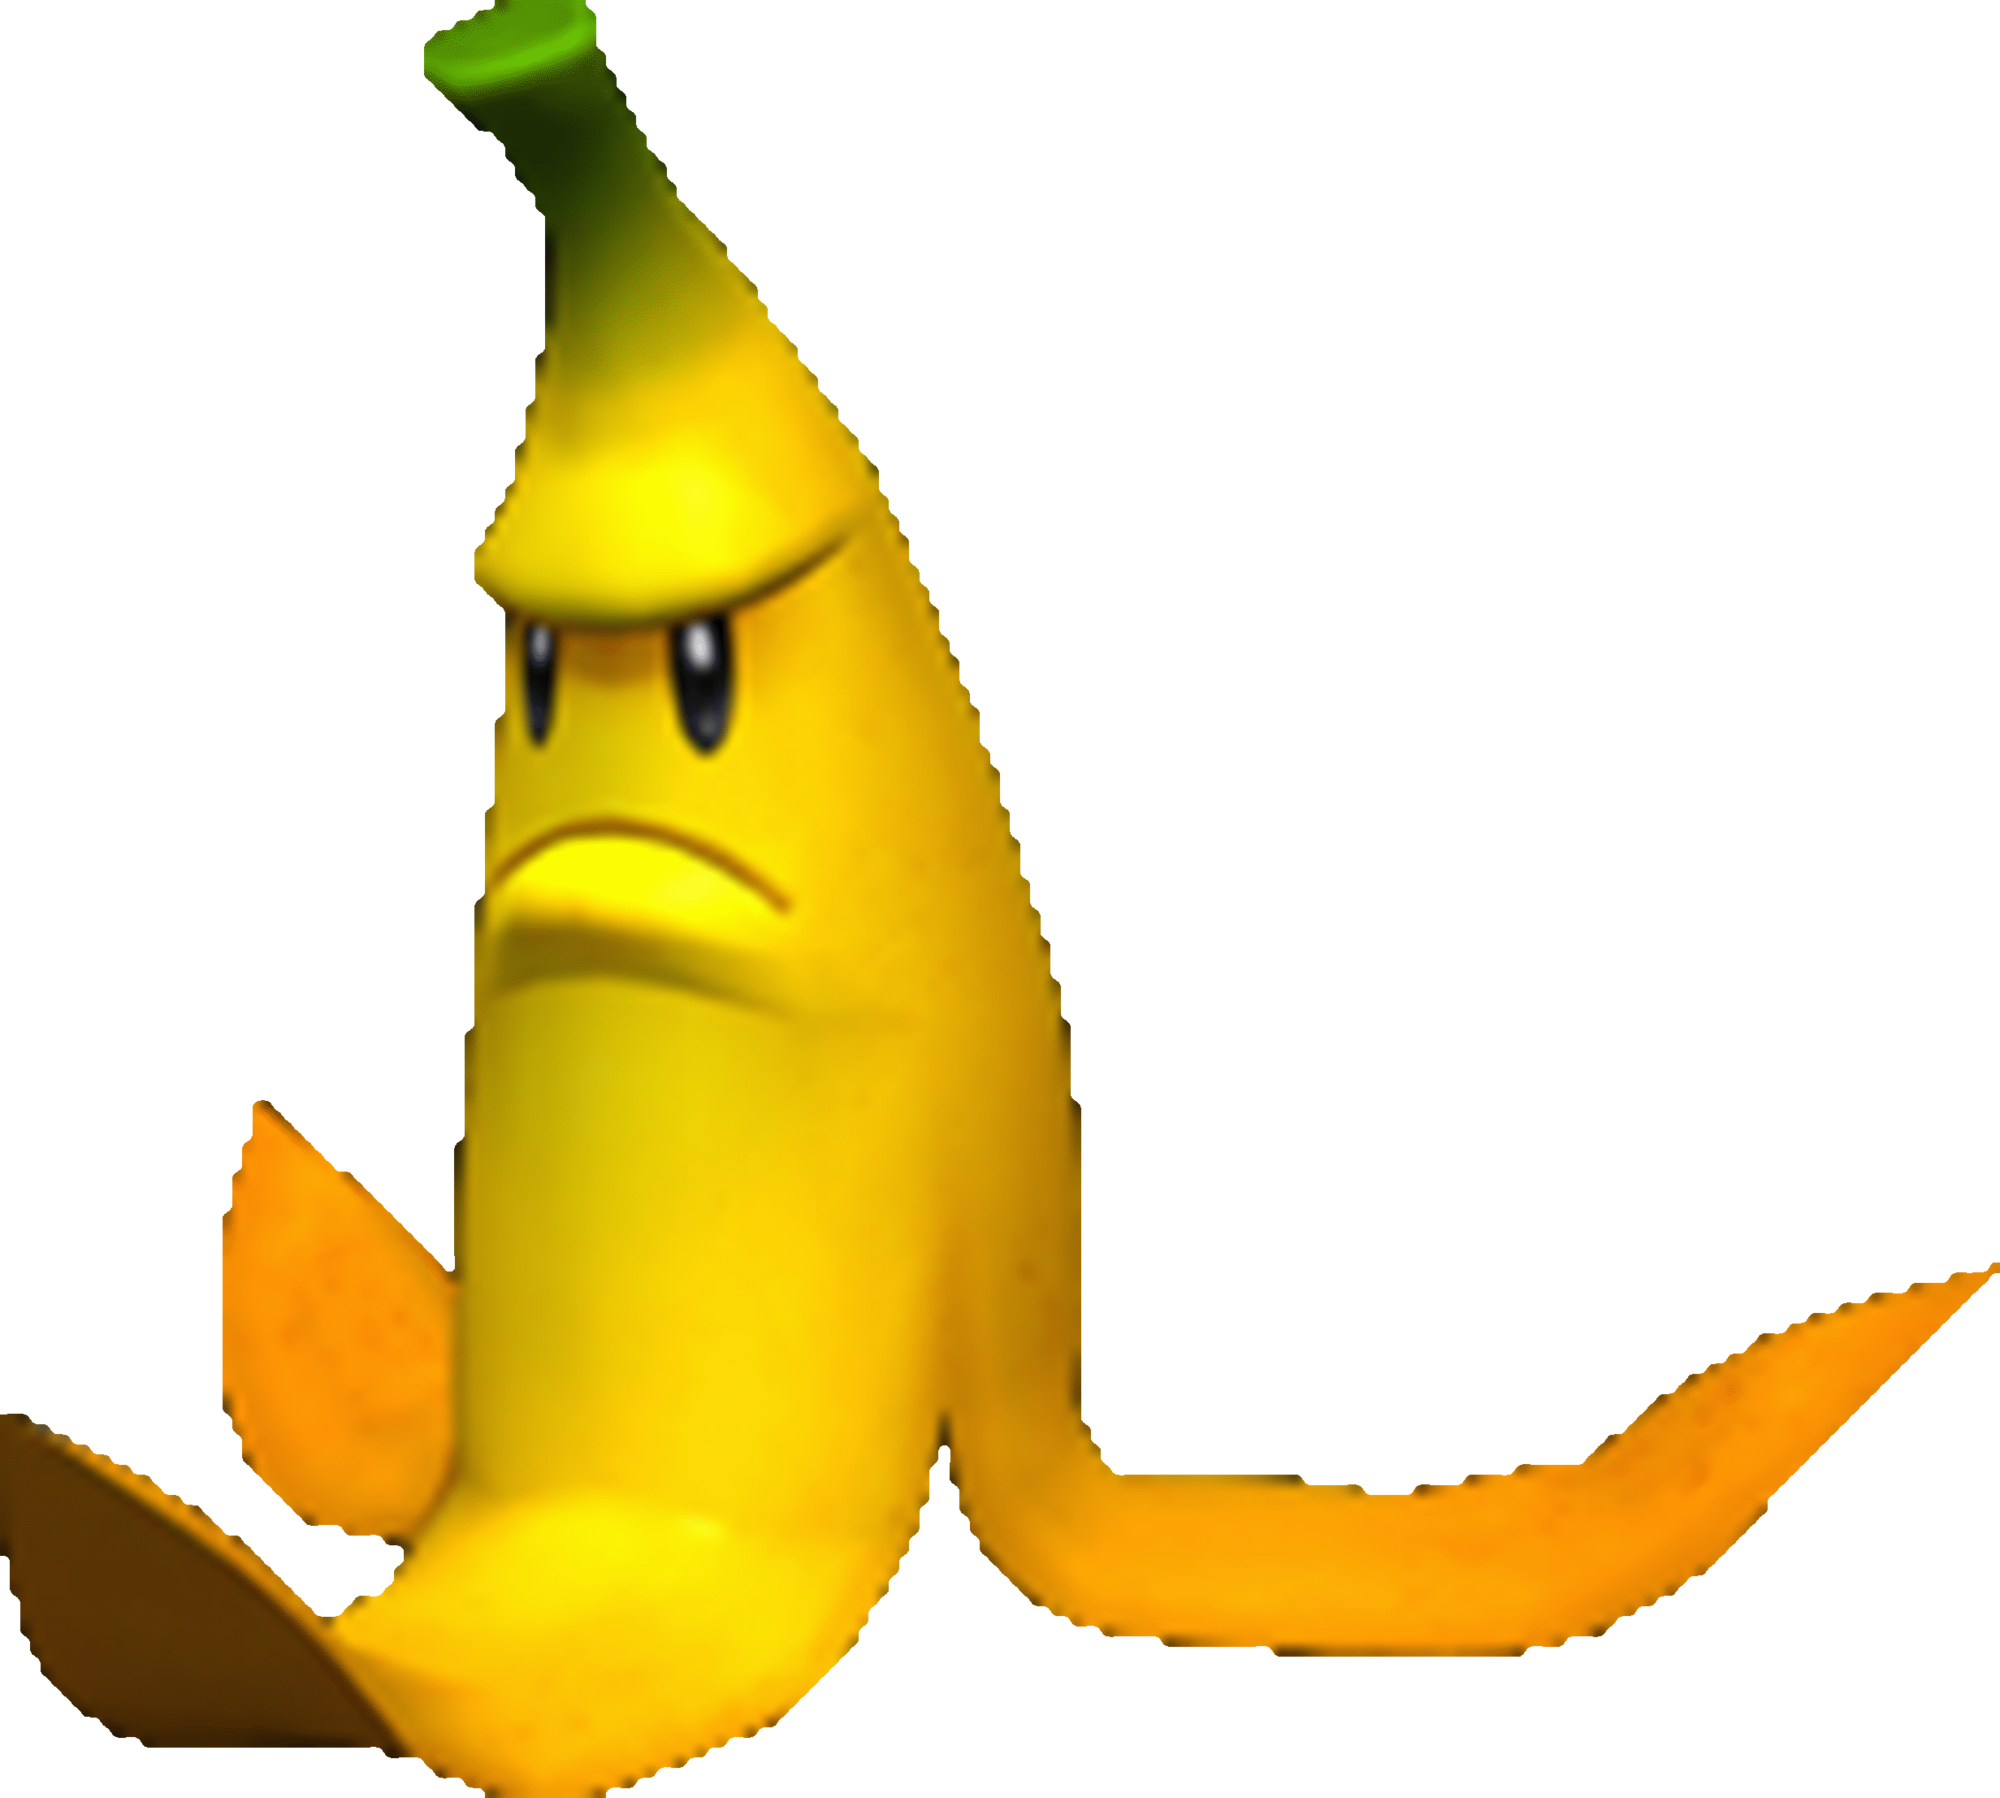 Angry Banana Peel PNG Download Free PNG Image